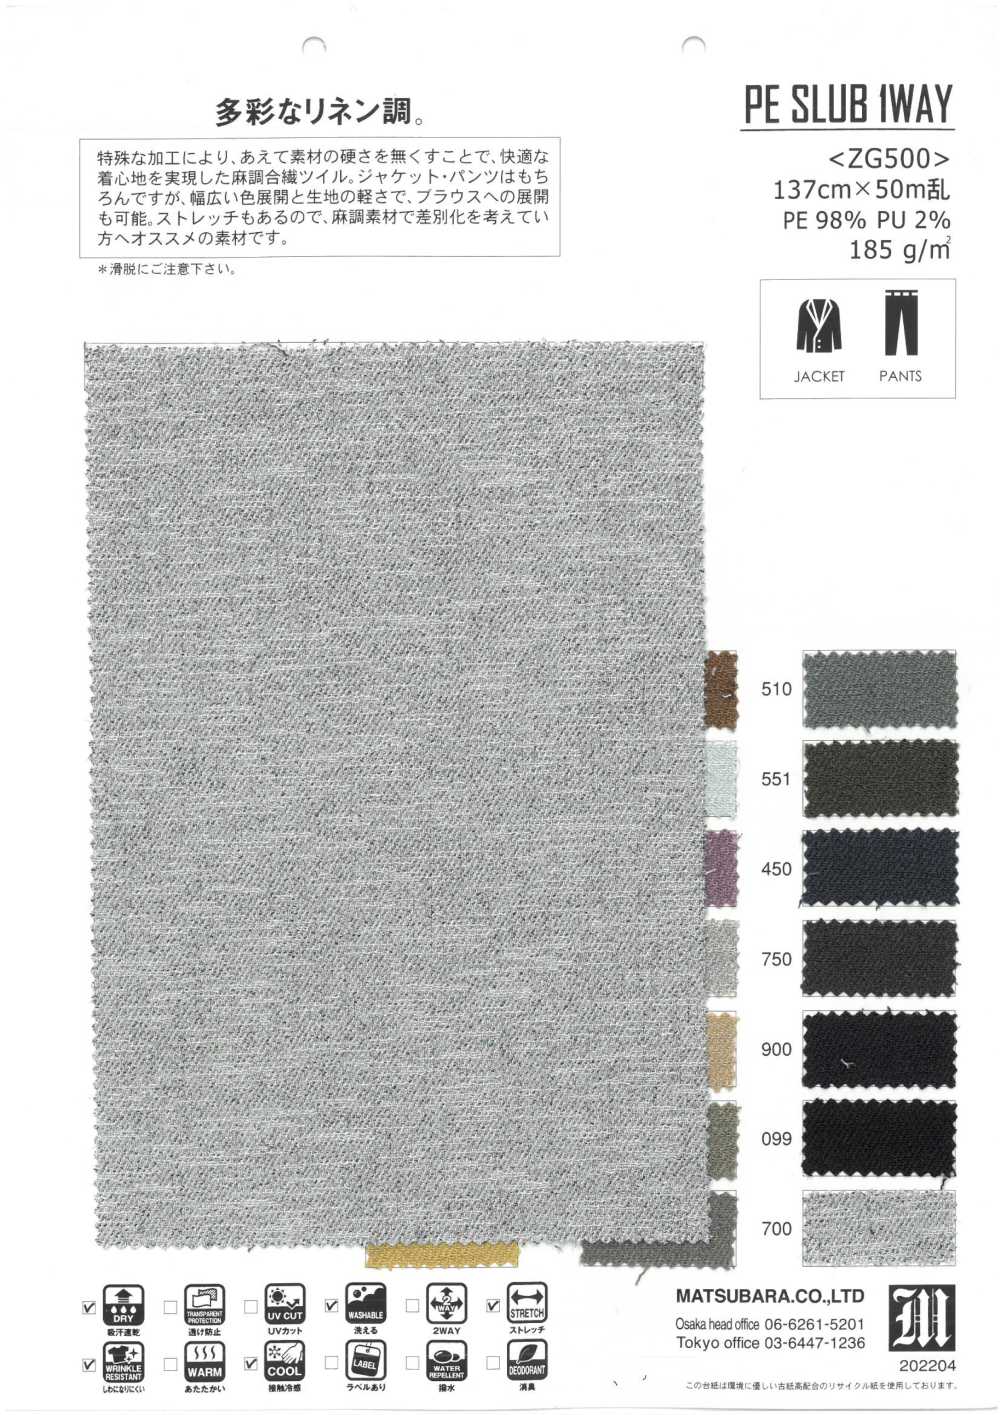 ZG500 PE SLUB 1 VÍA[Fabrica Textil] Matsubara